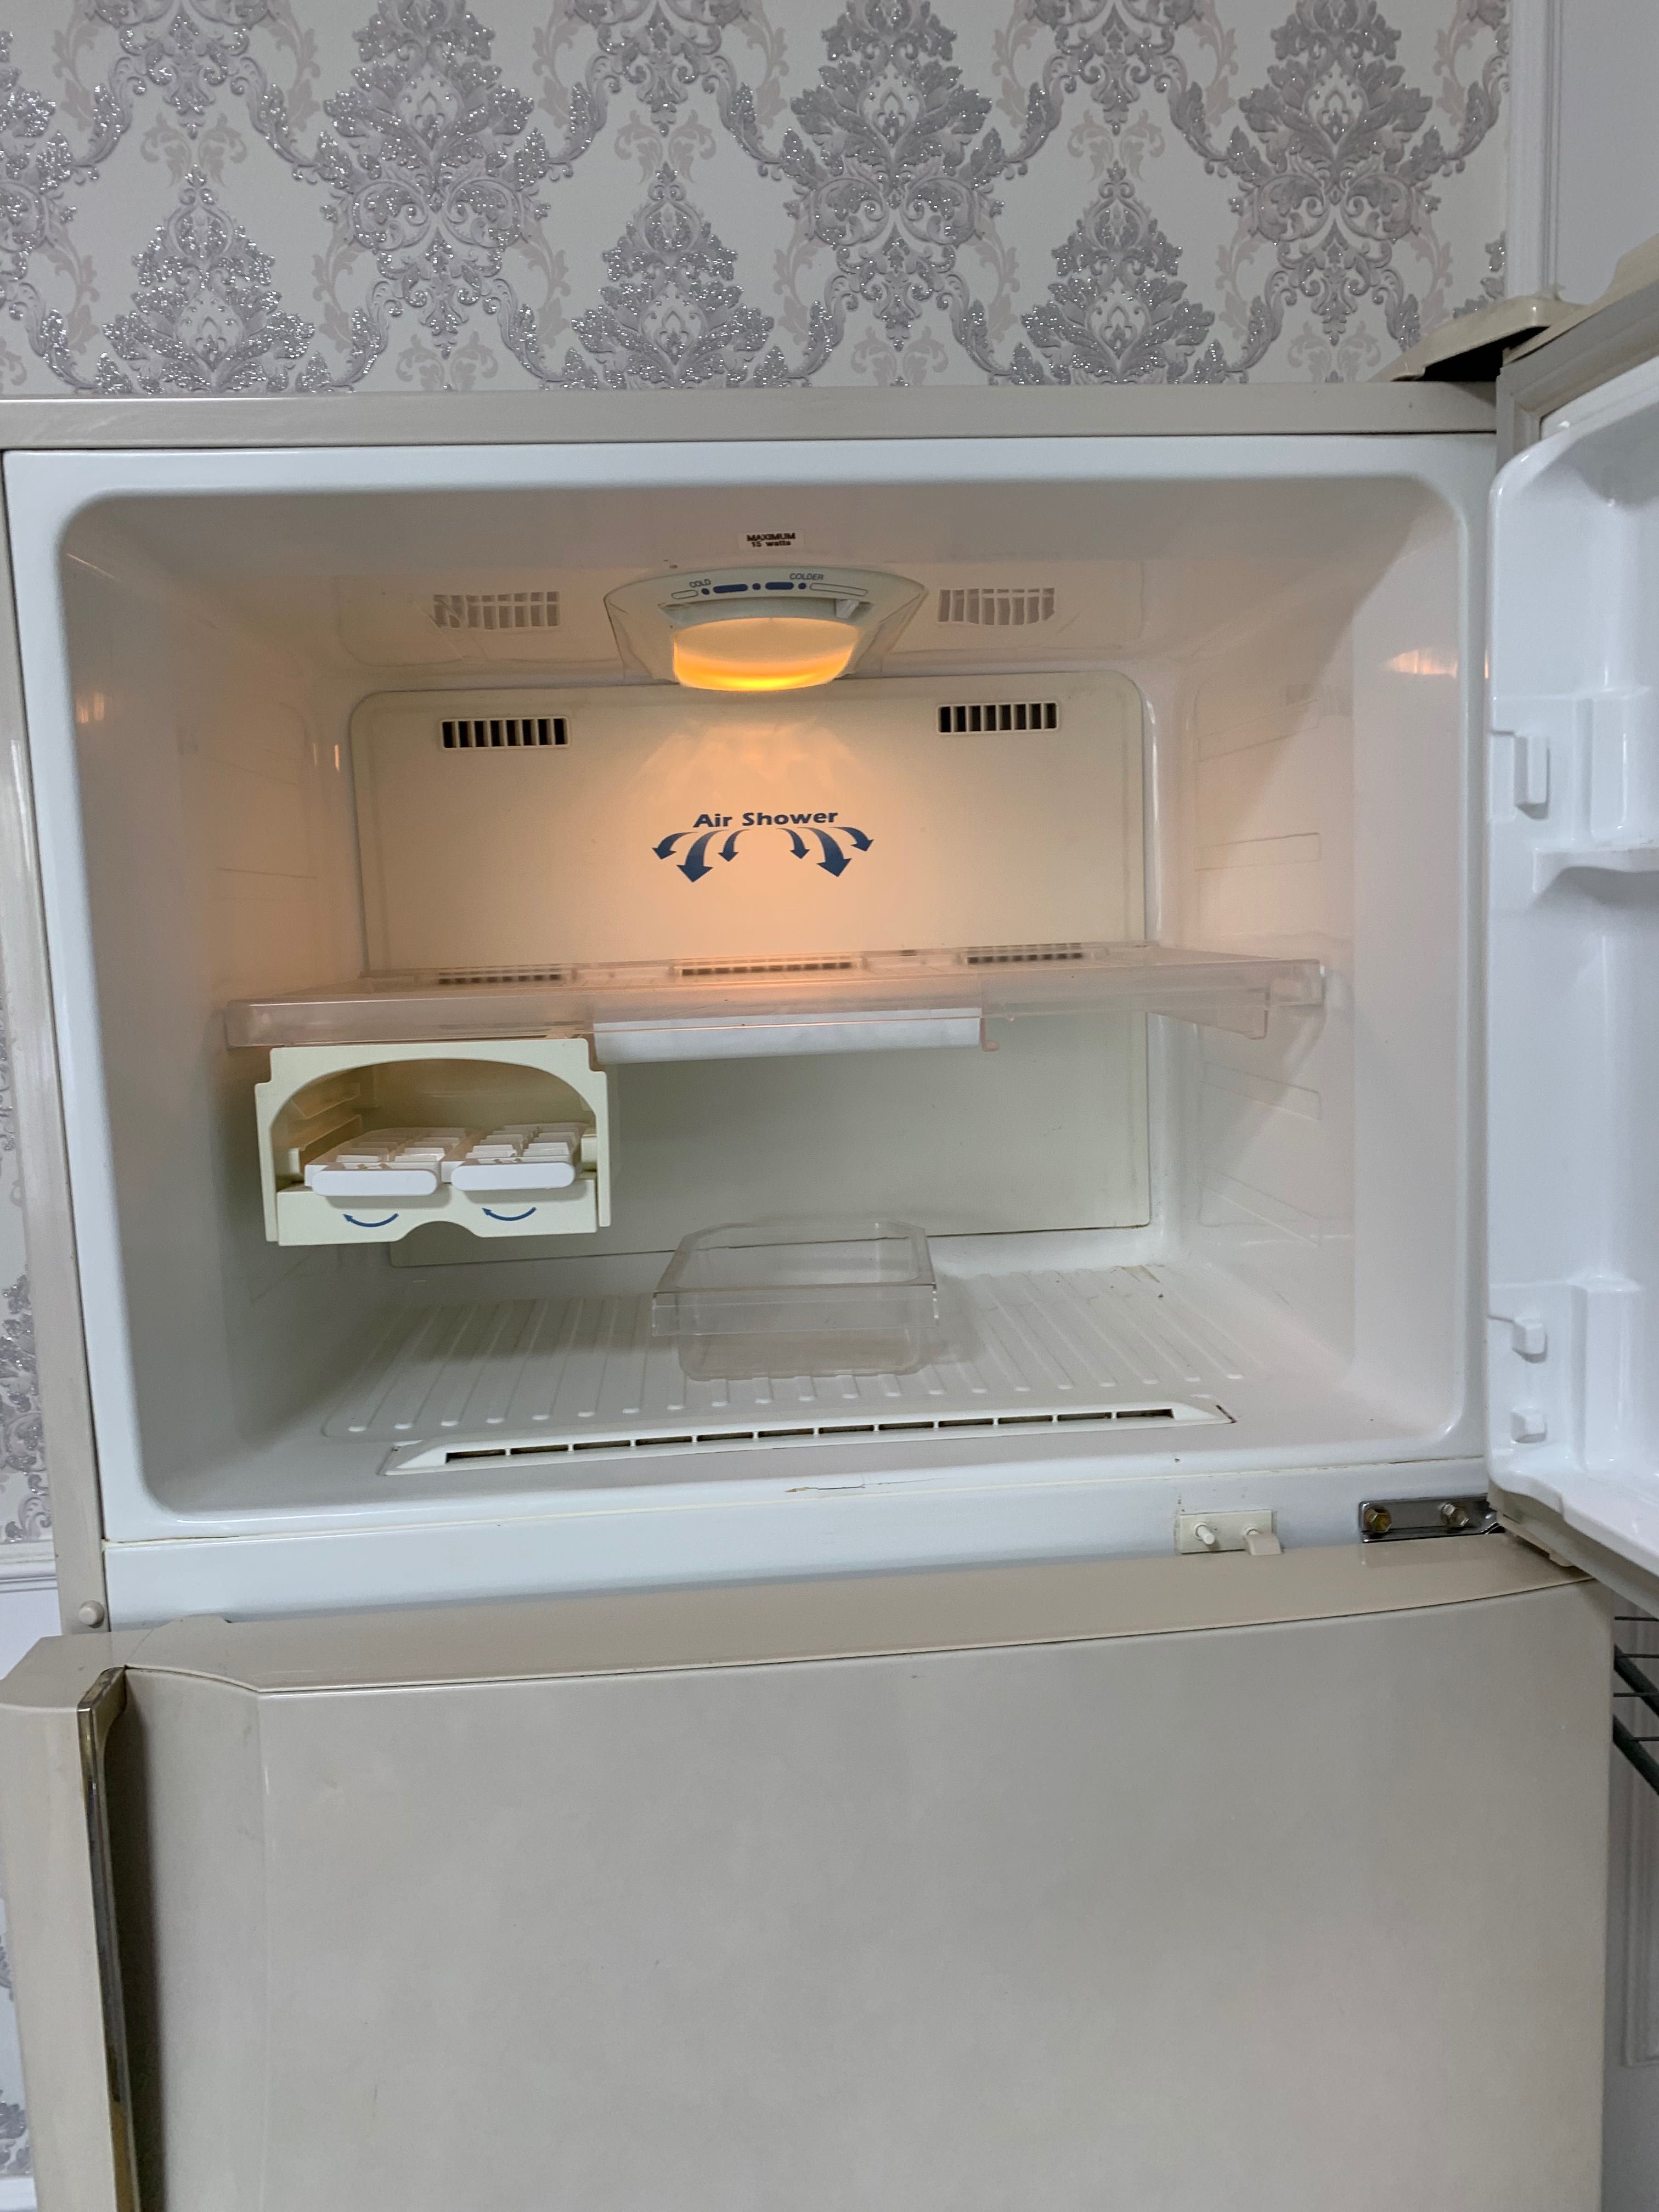 Продам холодильник Самсунг!